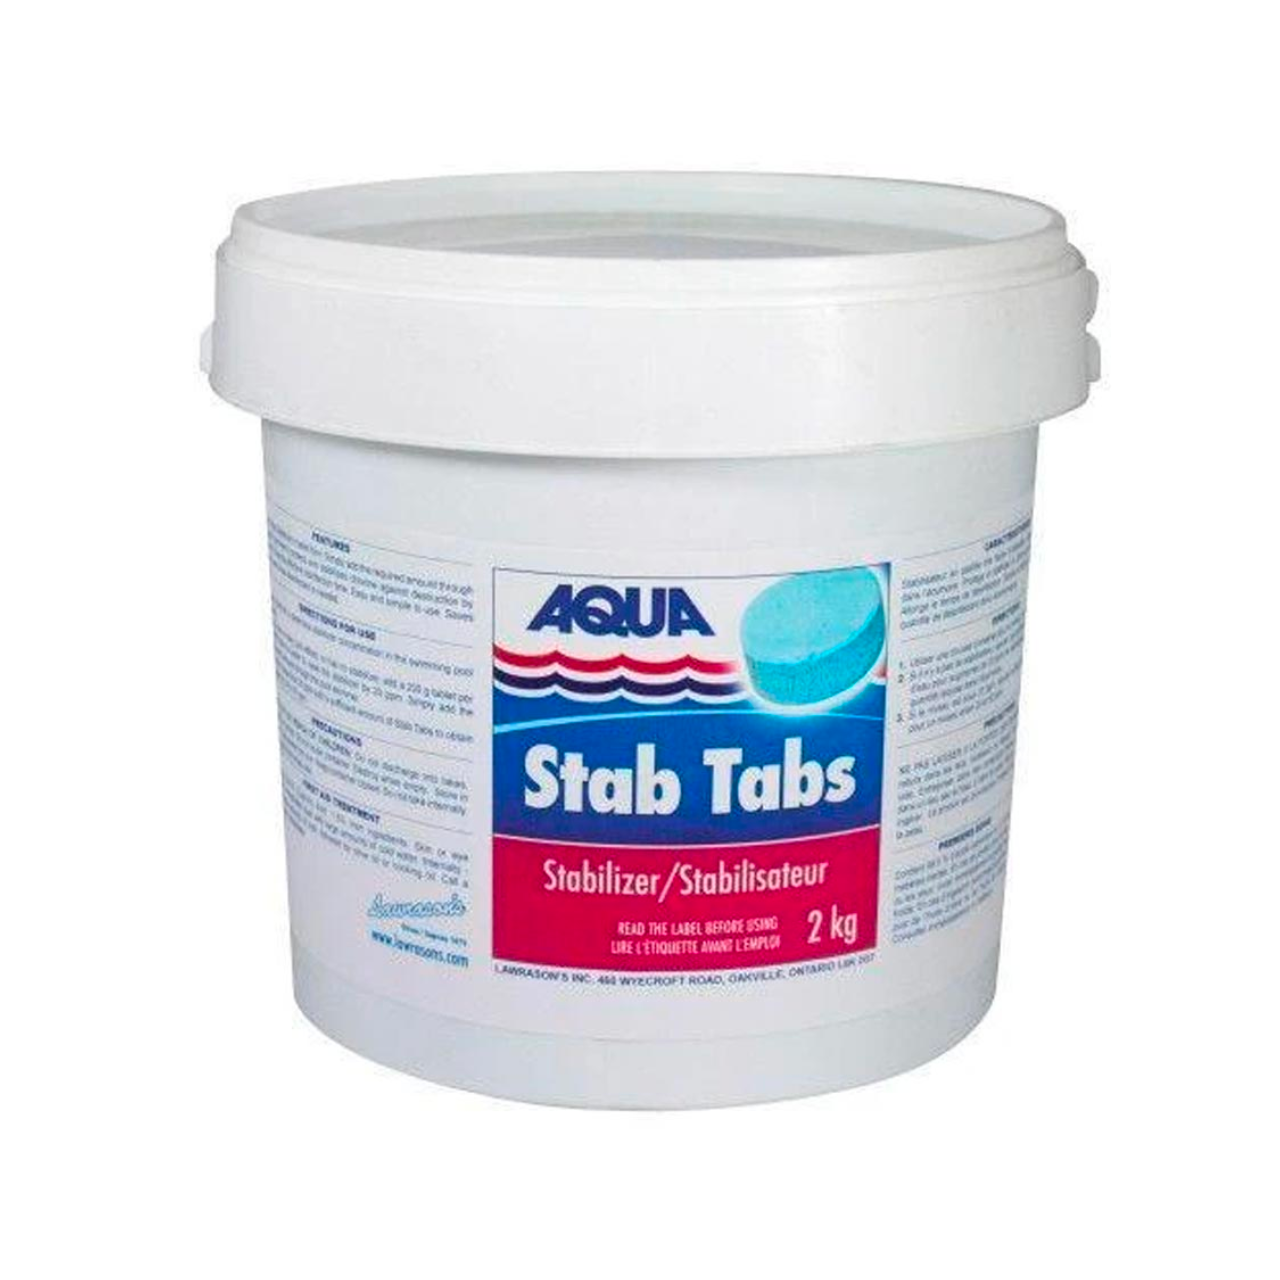 Aqua Stab Tabs